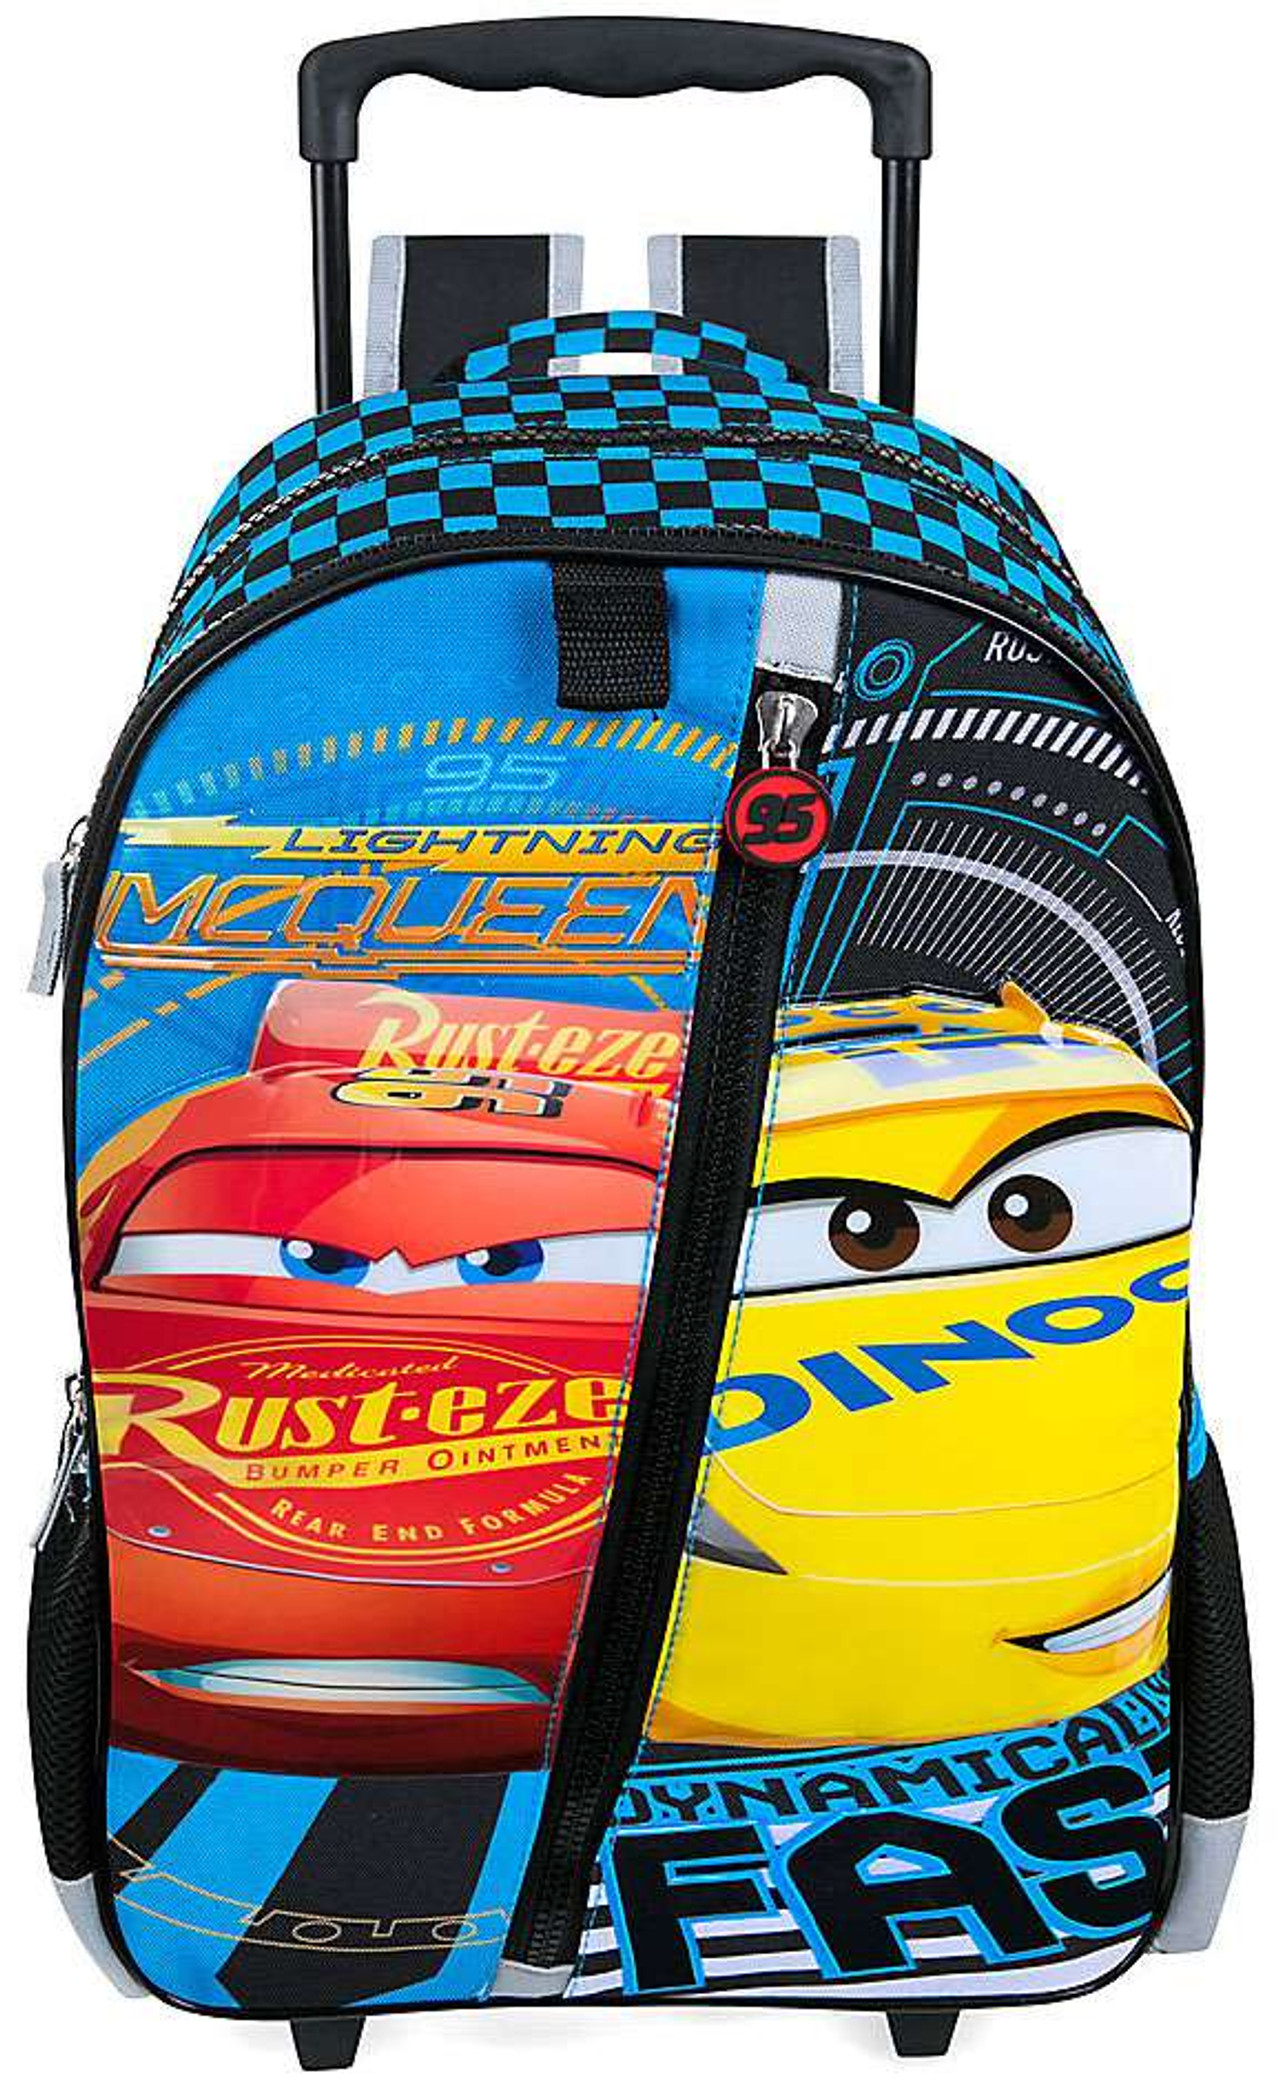 Disney Pixar Cars Cars 3 Cars 3 Rolling Exclusive Backpack